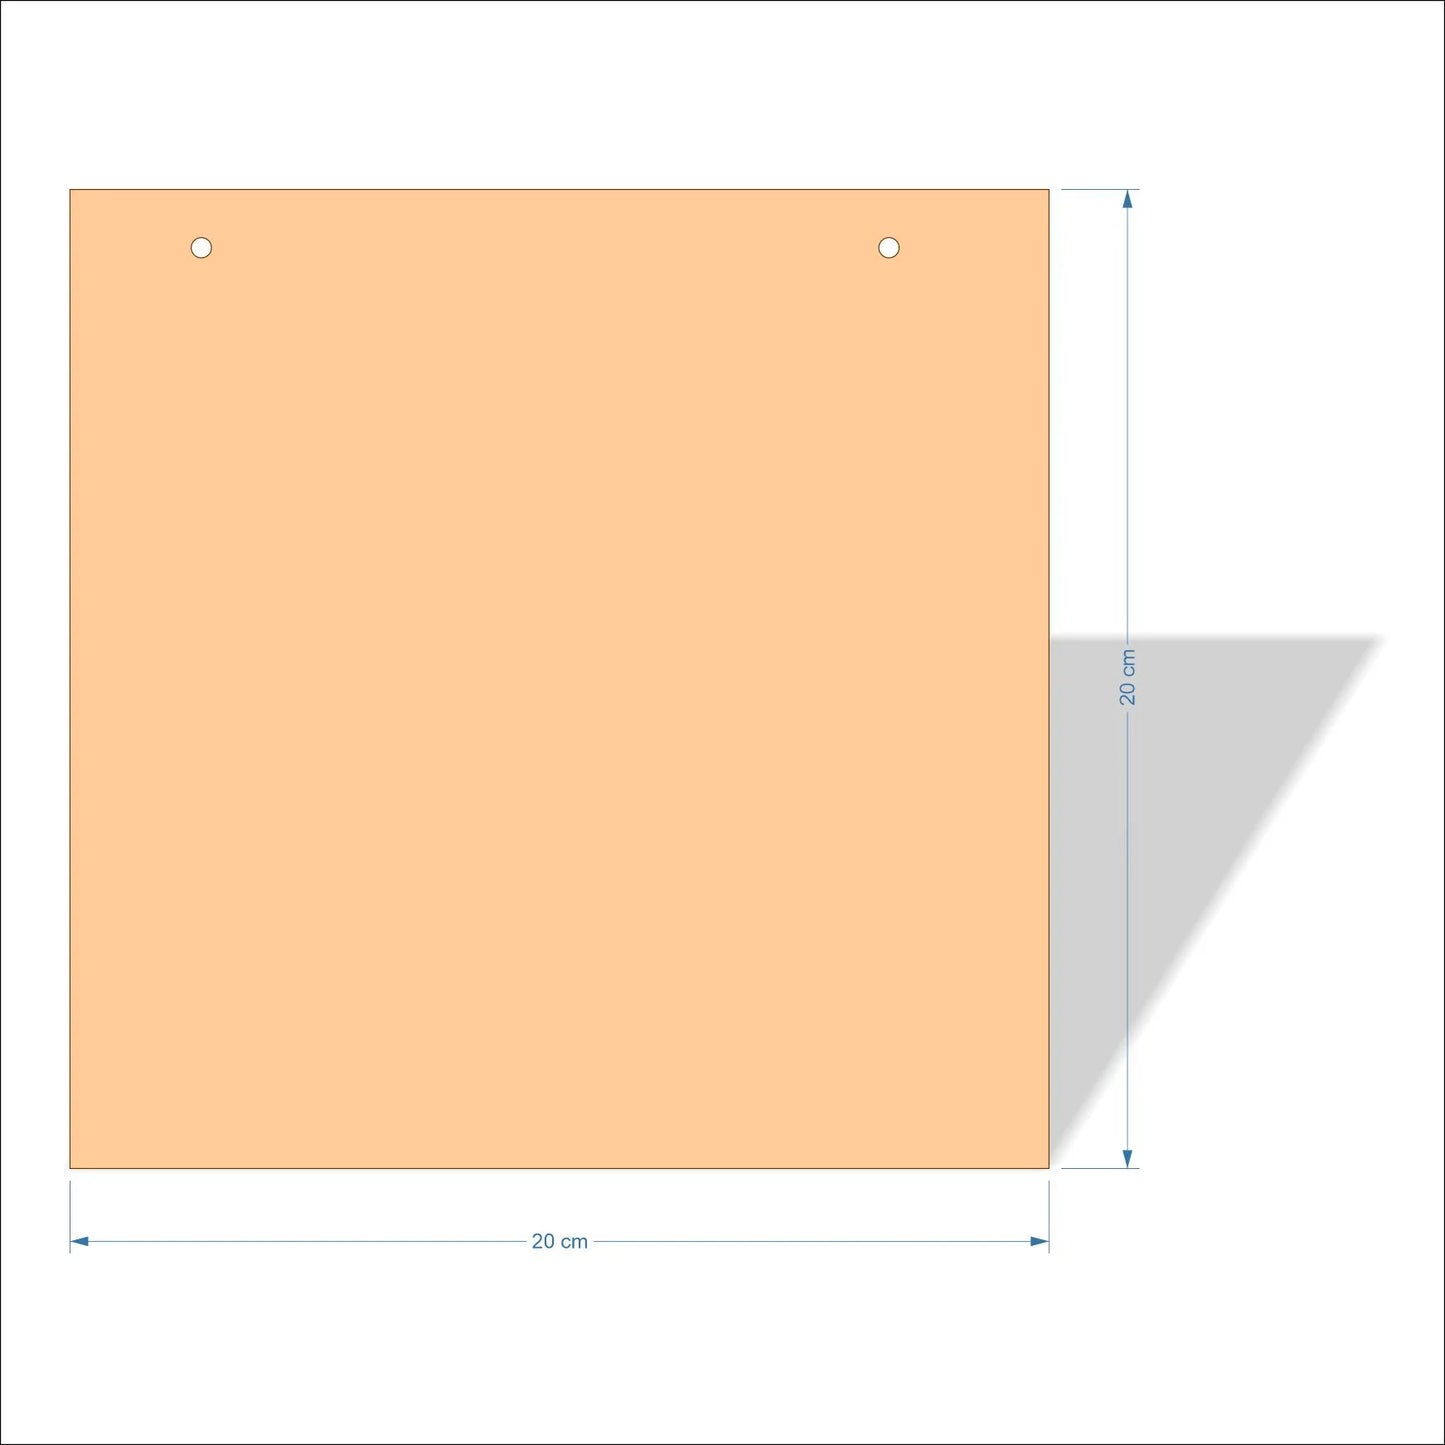 20 cm X 20 cm 4mm poplar plywood Plaques with square corners